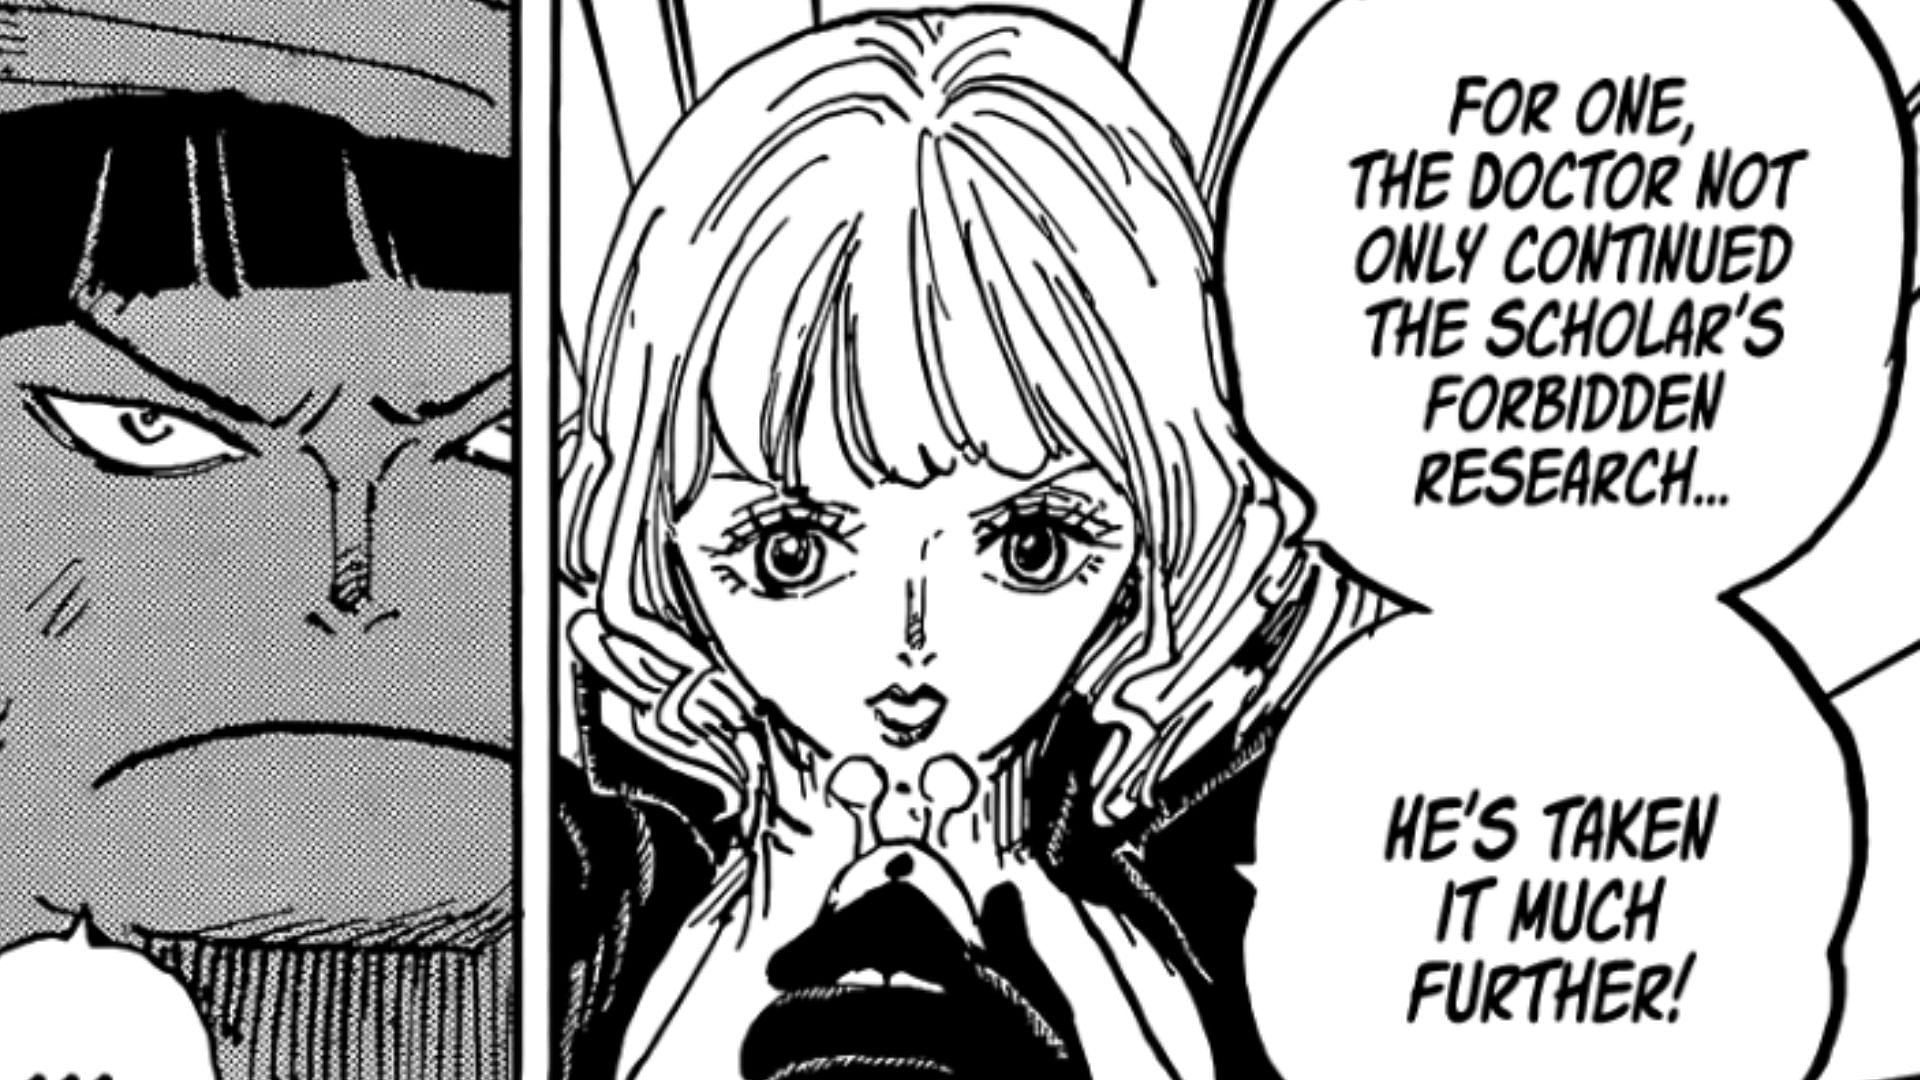 A panel from the One Piece manga series (Image via Shueisha)